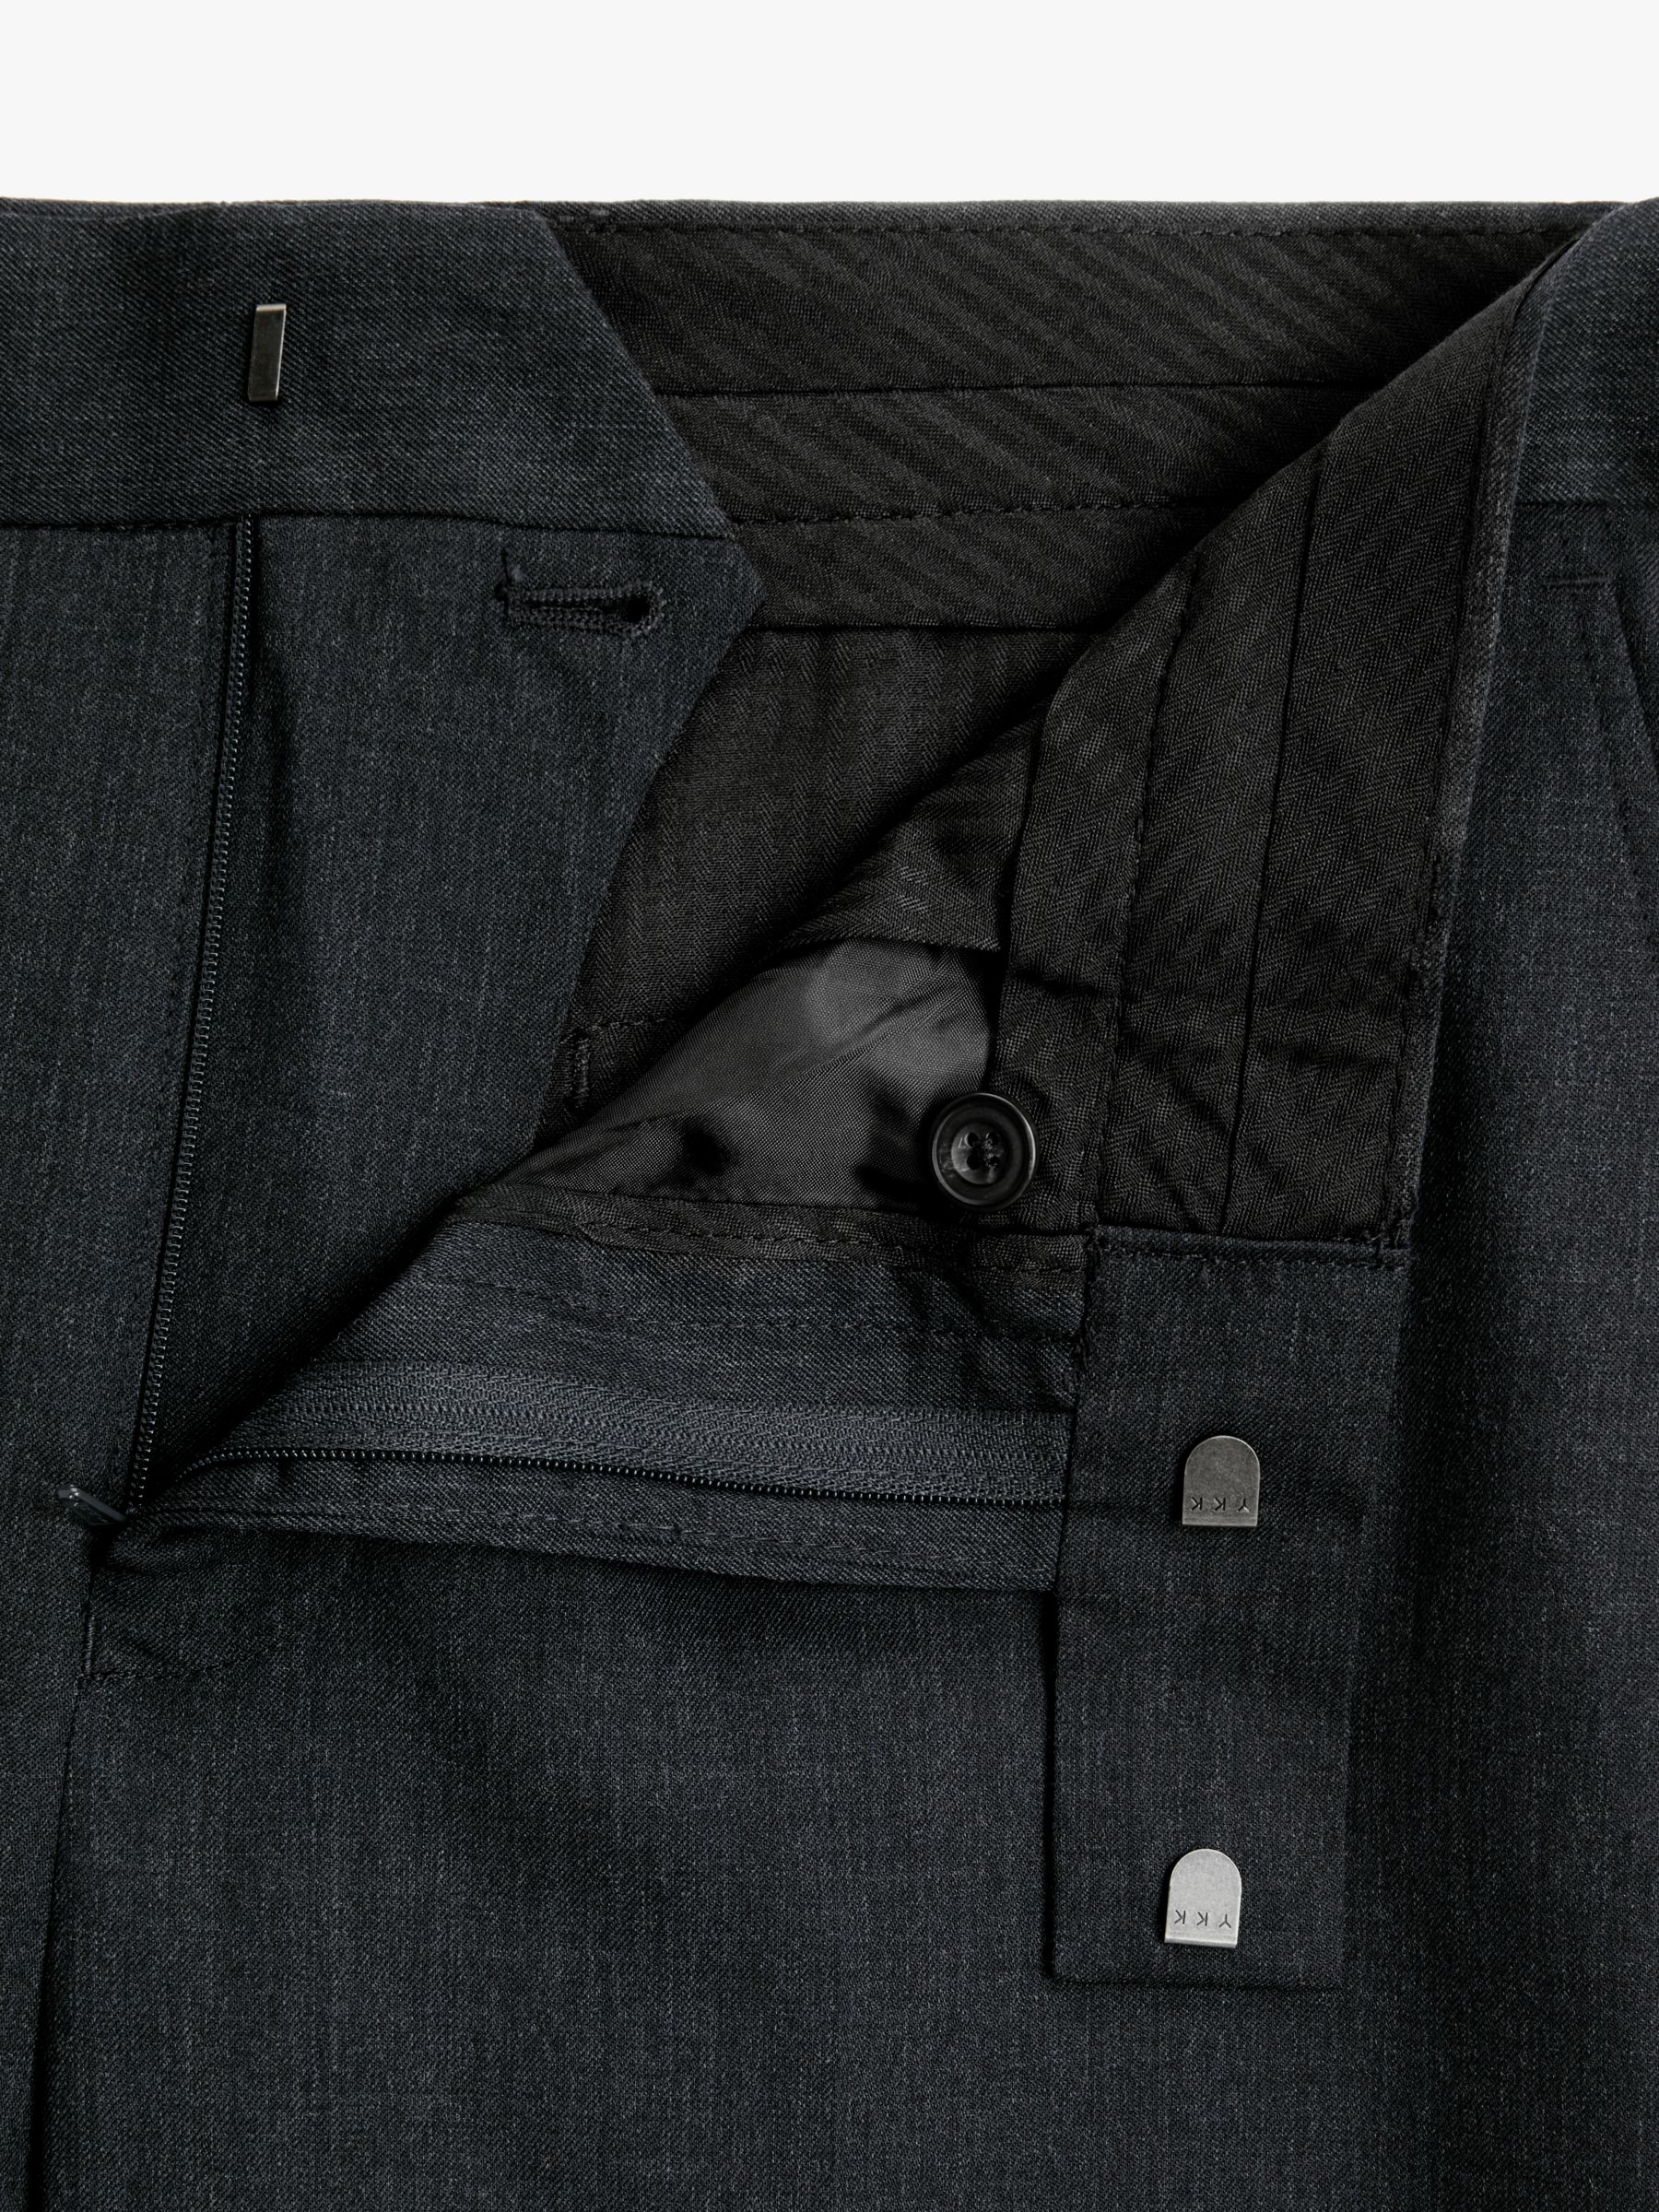 Buy John Lewis Washable Wool Blend Regular Fit Suit Trousers Online at johnlewis.com